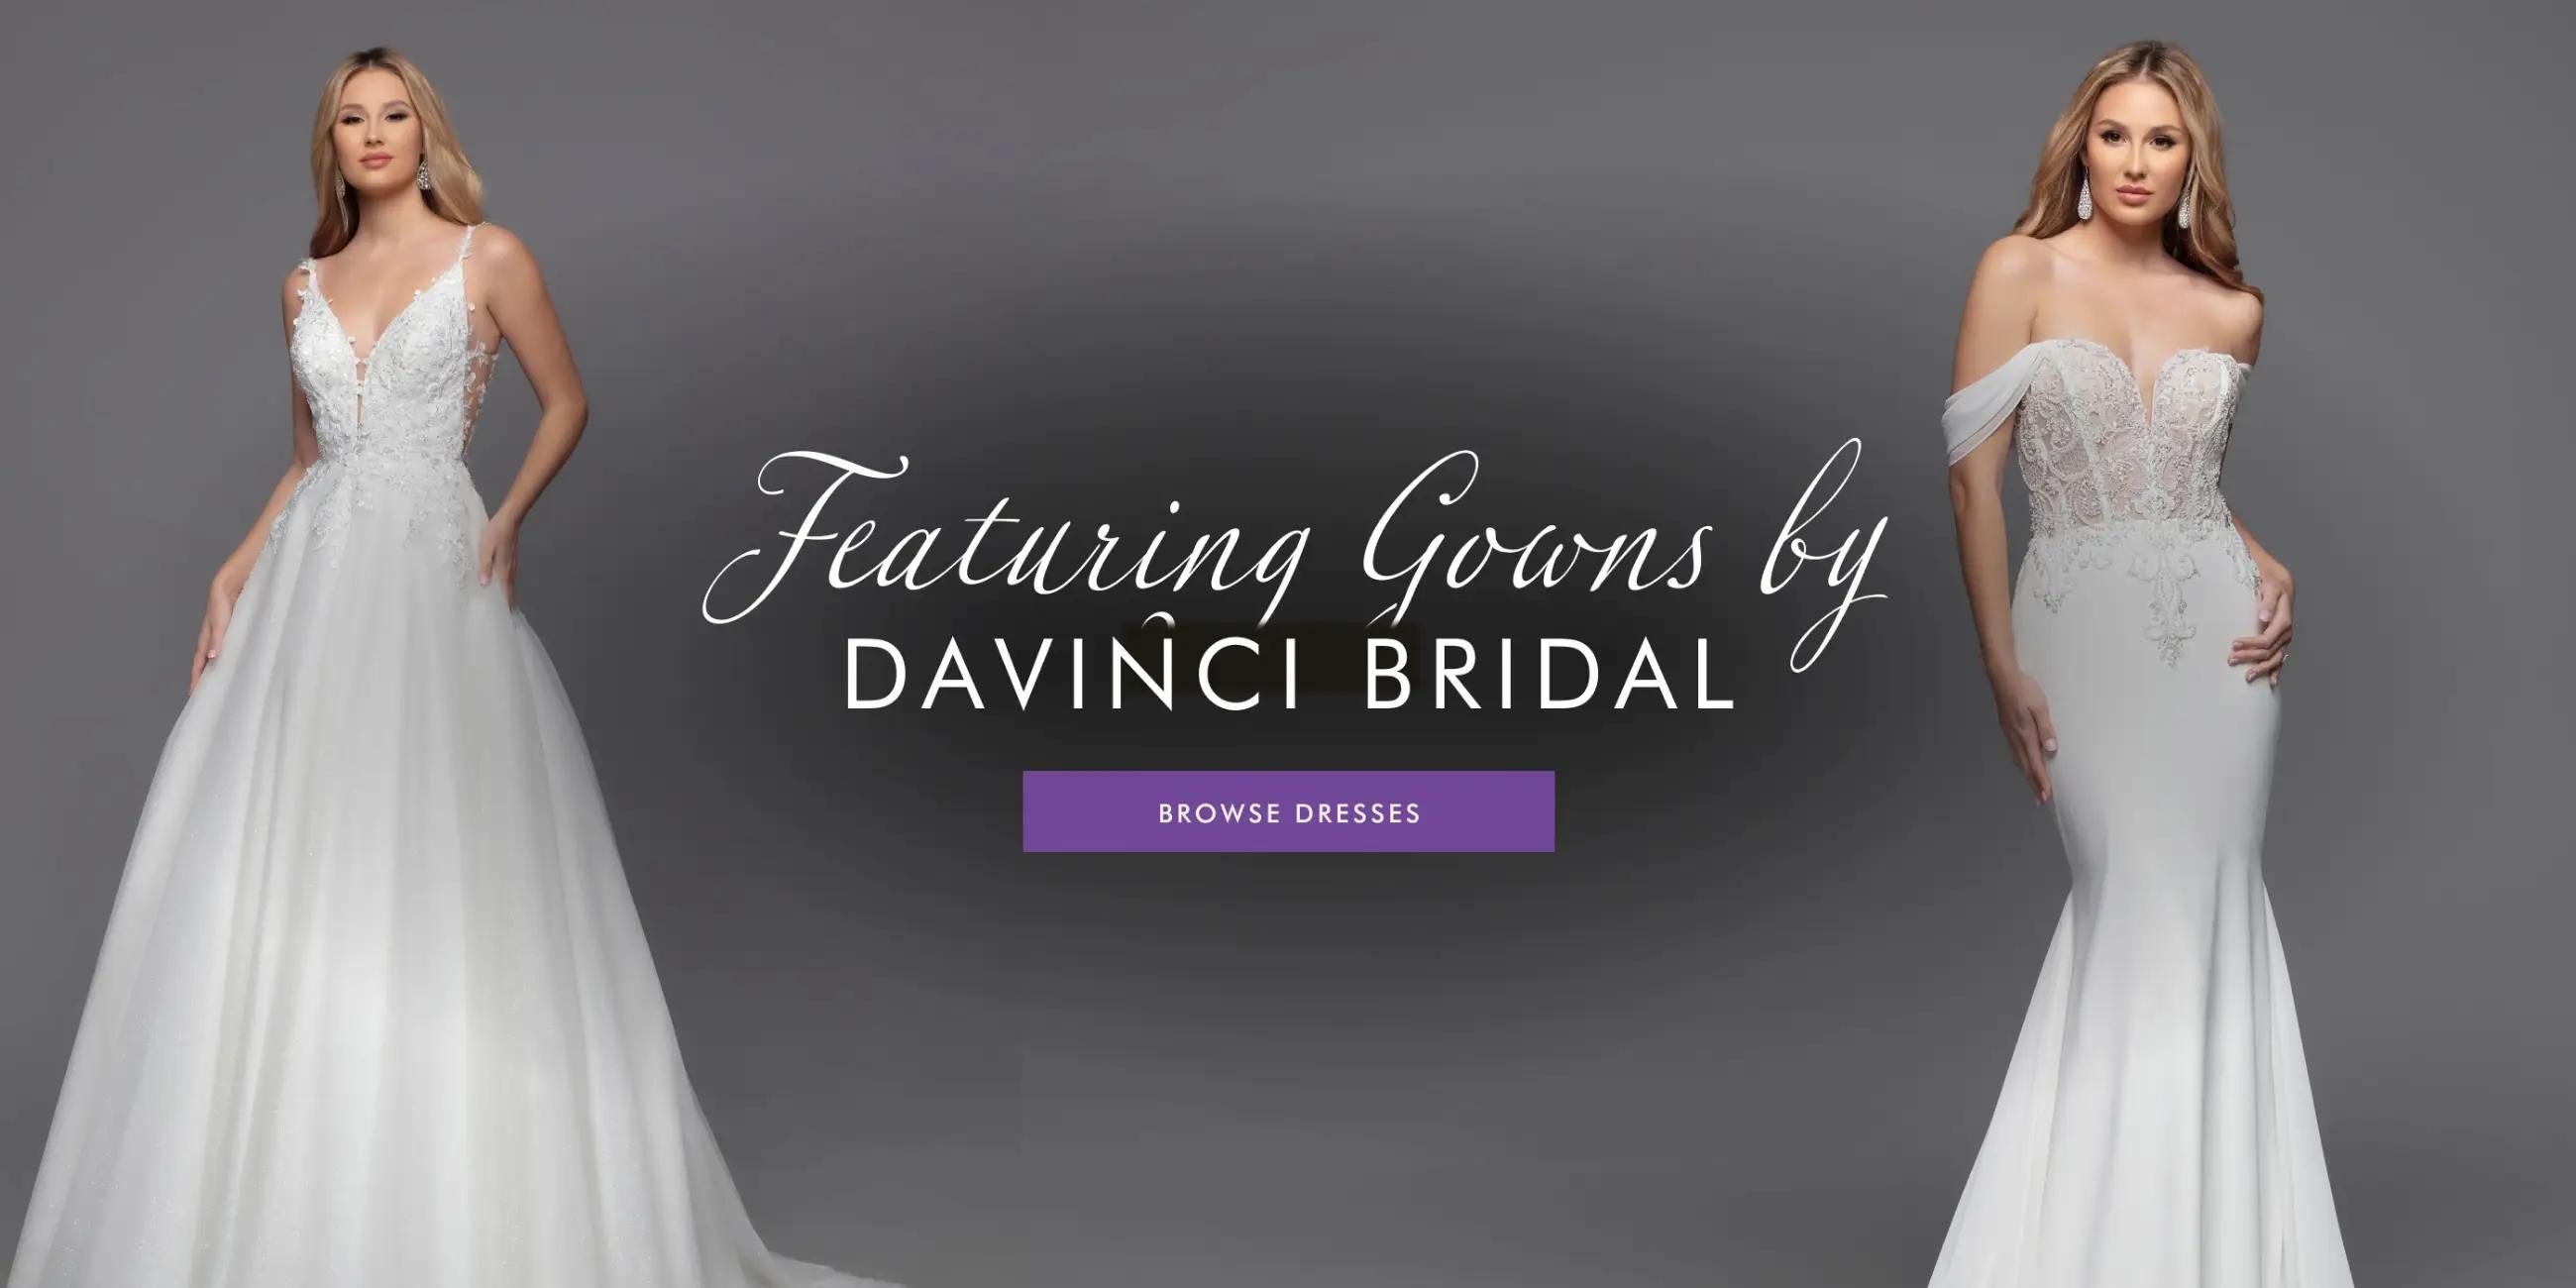 Desktop banner featuring Davinci Bridal dresses